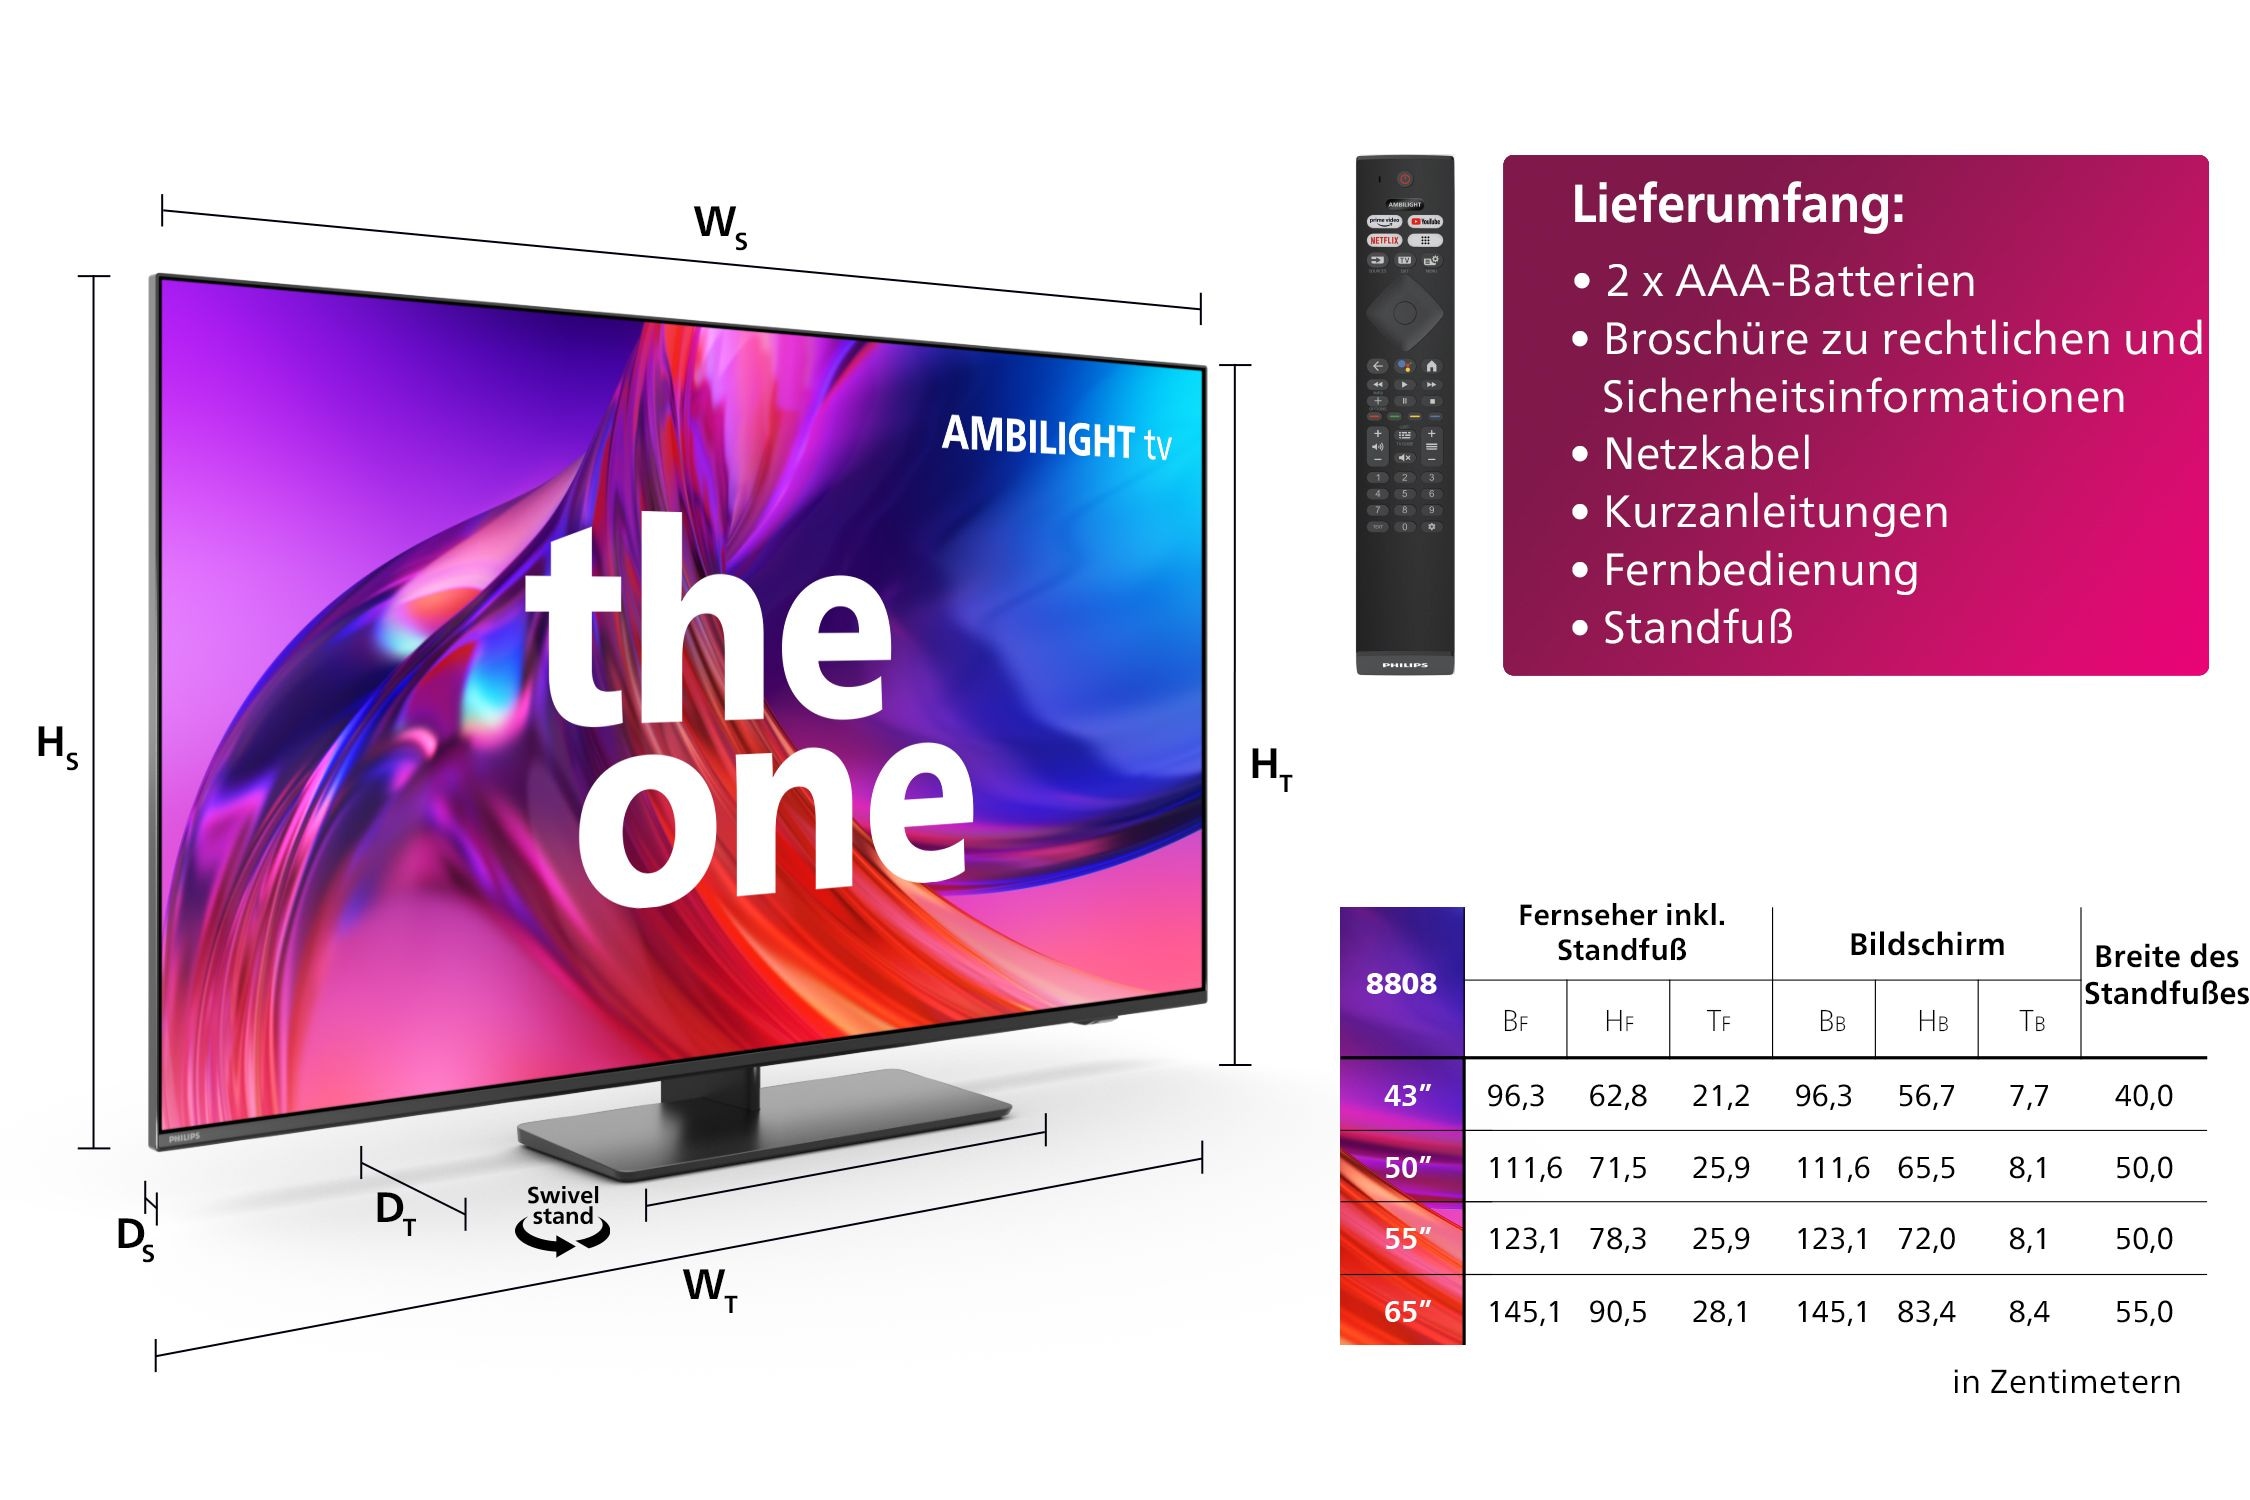 Philips LED-Fernseher, 139 cm/55 Zoll, 4K Ultra HD, Android TV-Smart-TV-Google TV